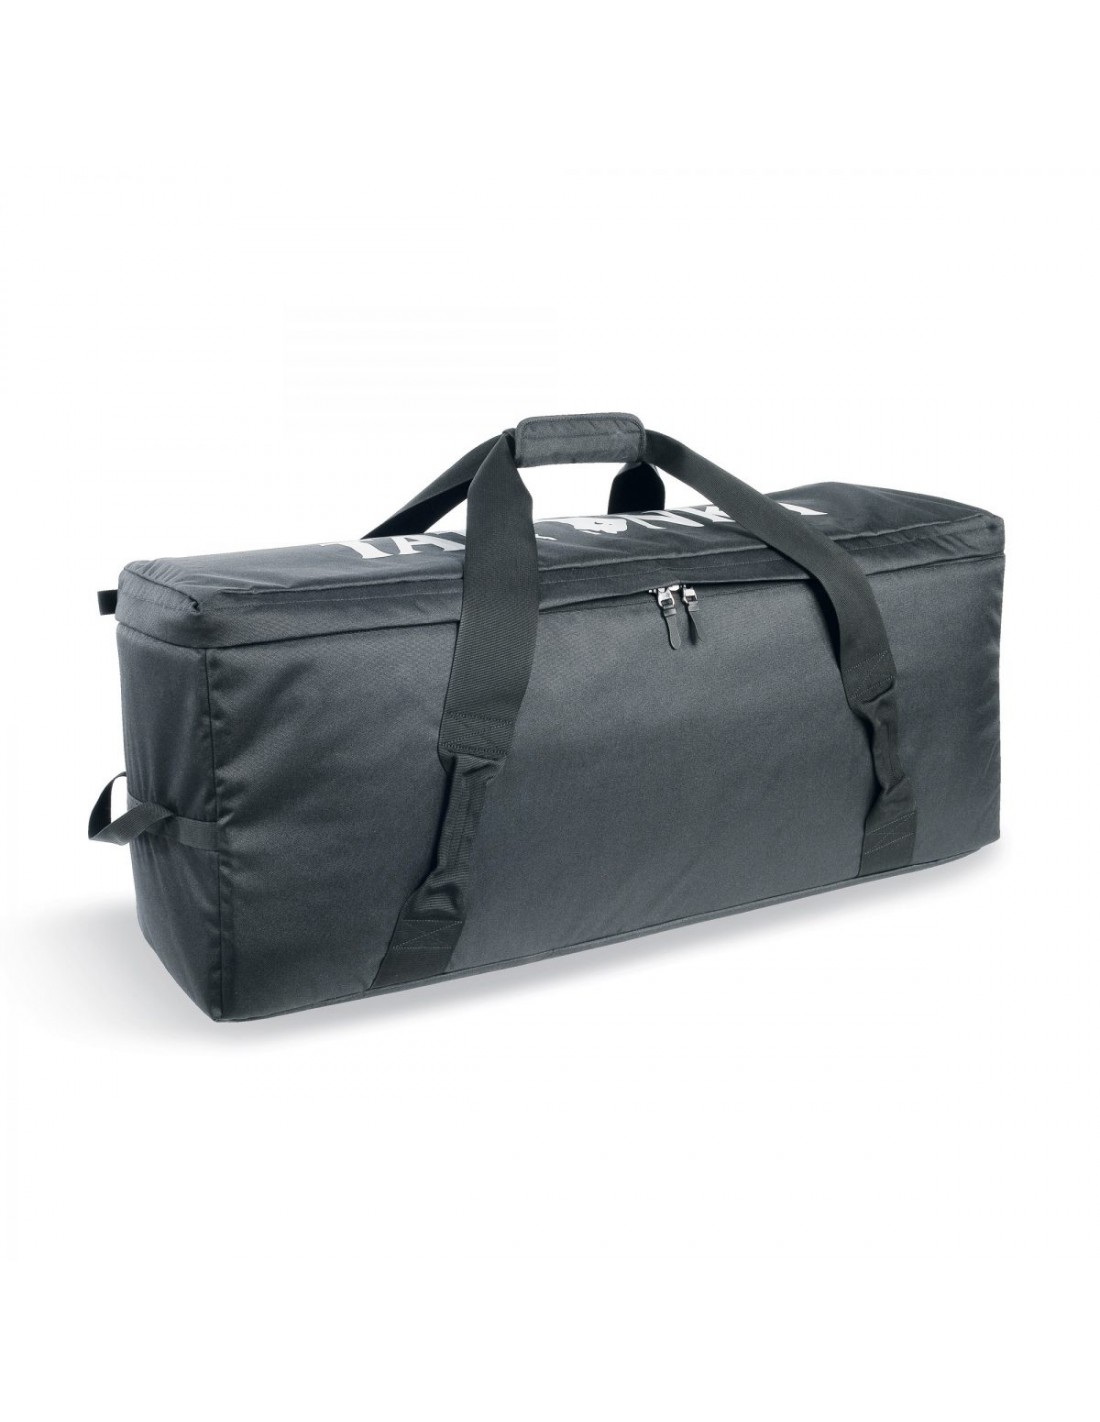 Tatonka Gear Bag 100, black Taschenfarbe - Schwarz, von Tatonka